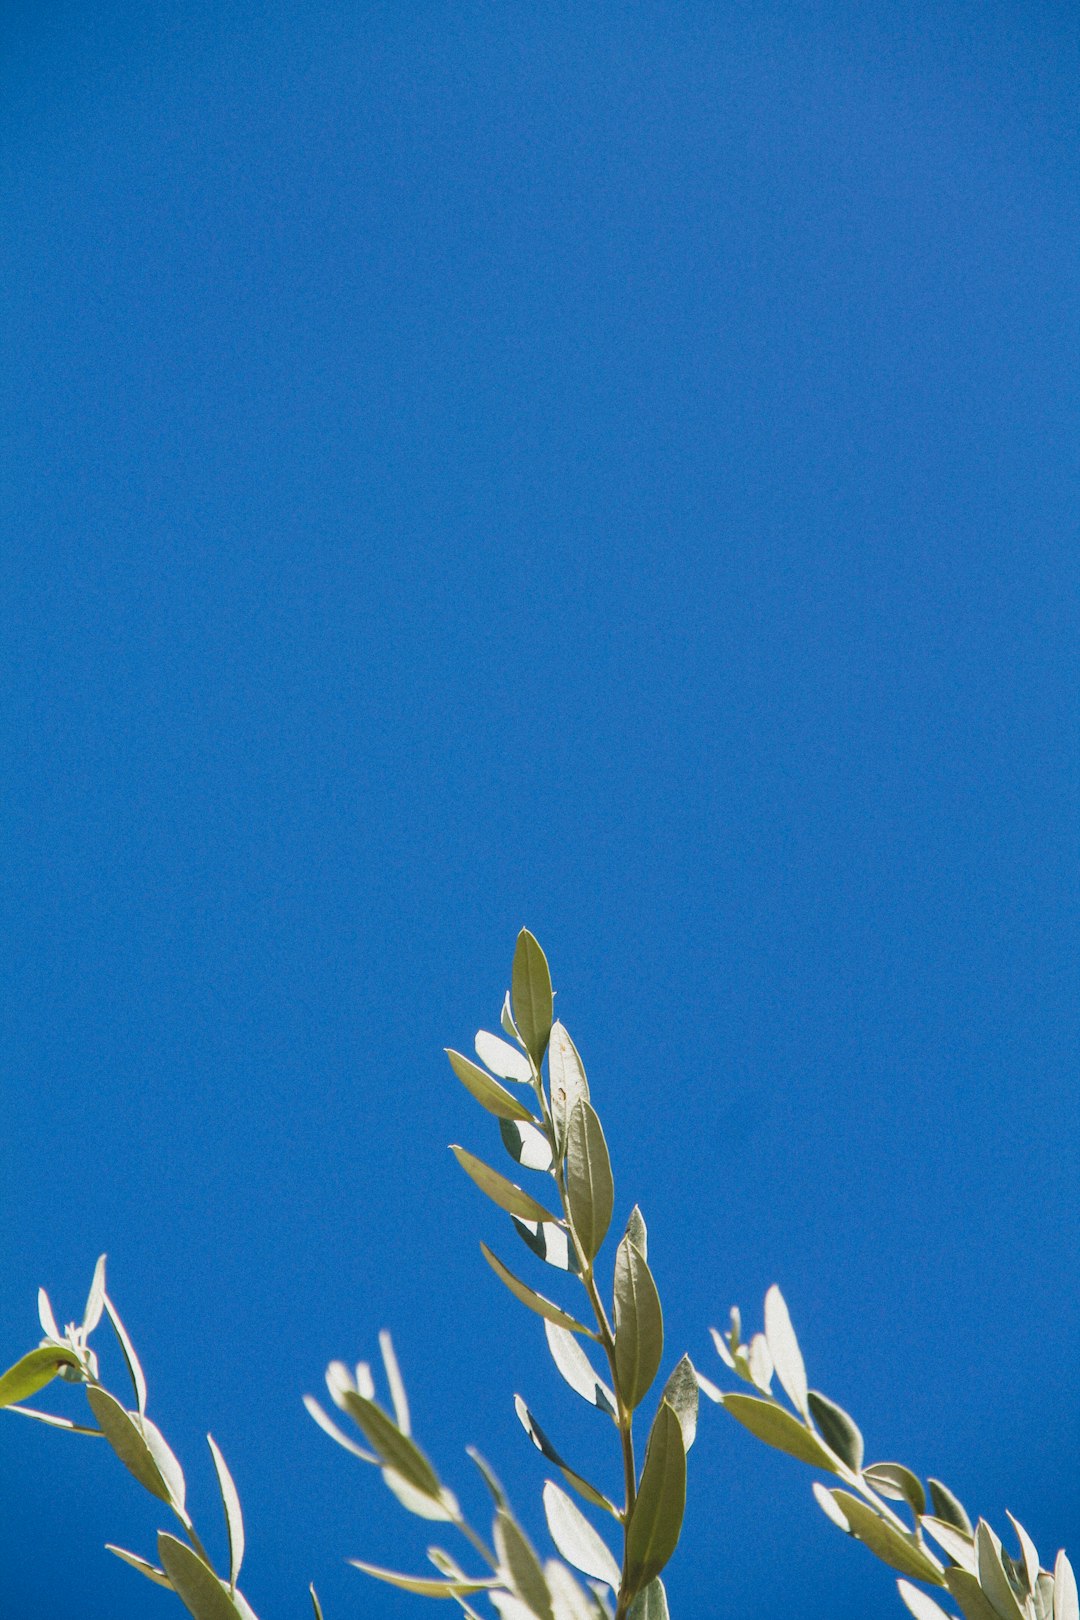 green leaves under blue sky during daytime